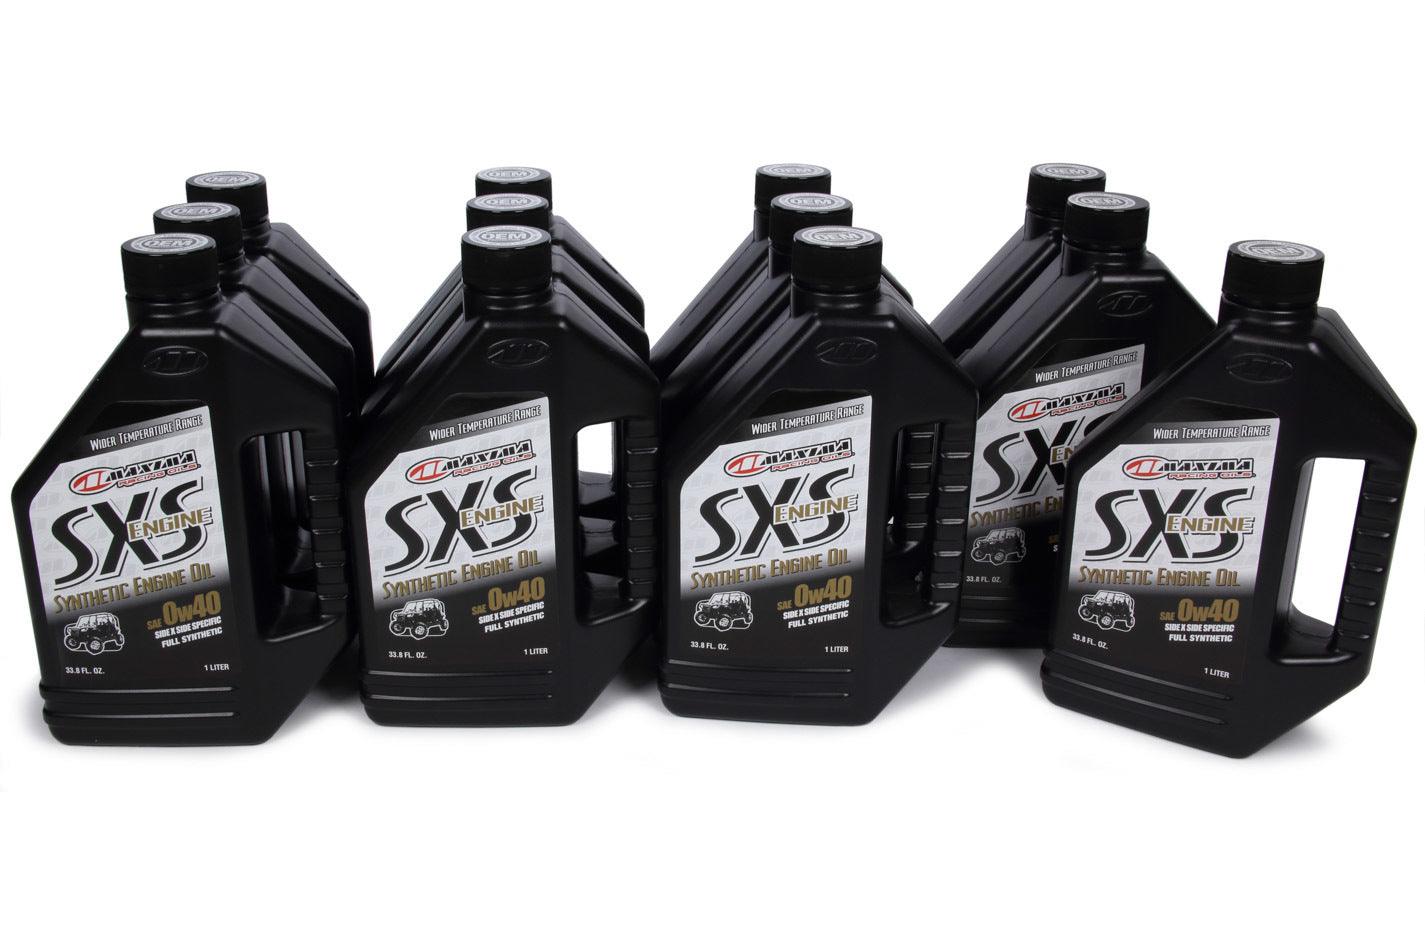 SXS Engine Full Syntheti c 0w40 Case 12 x 1 Liter - Burlile Performance Products